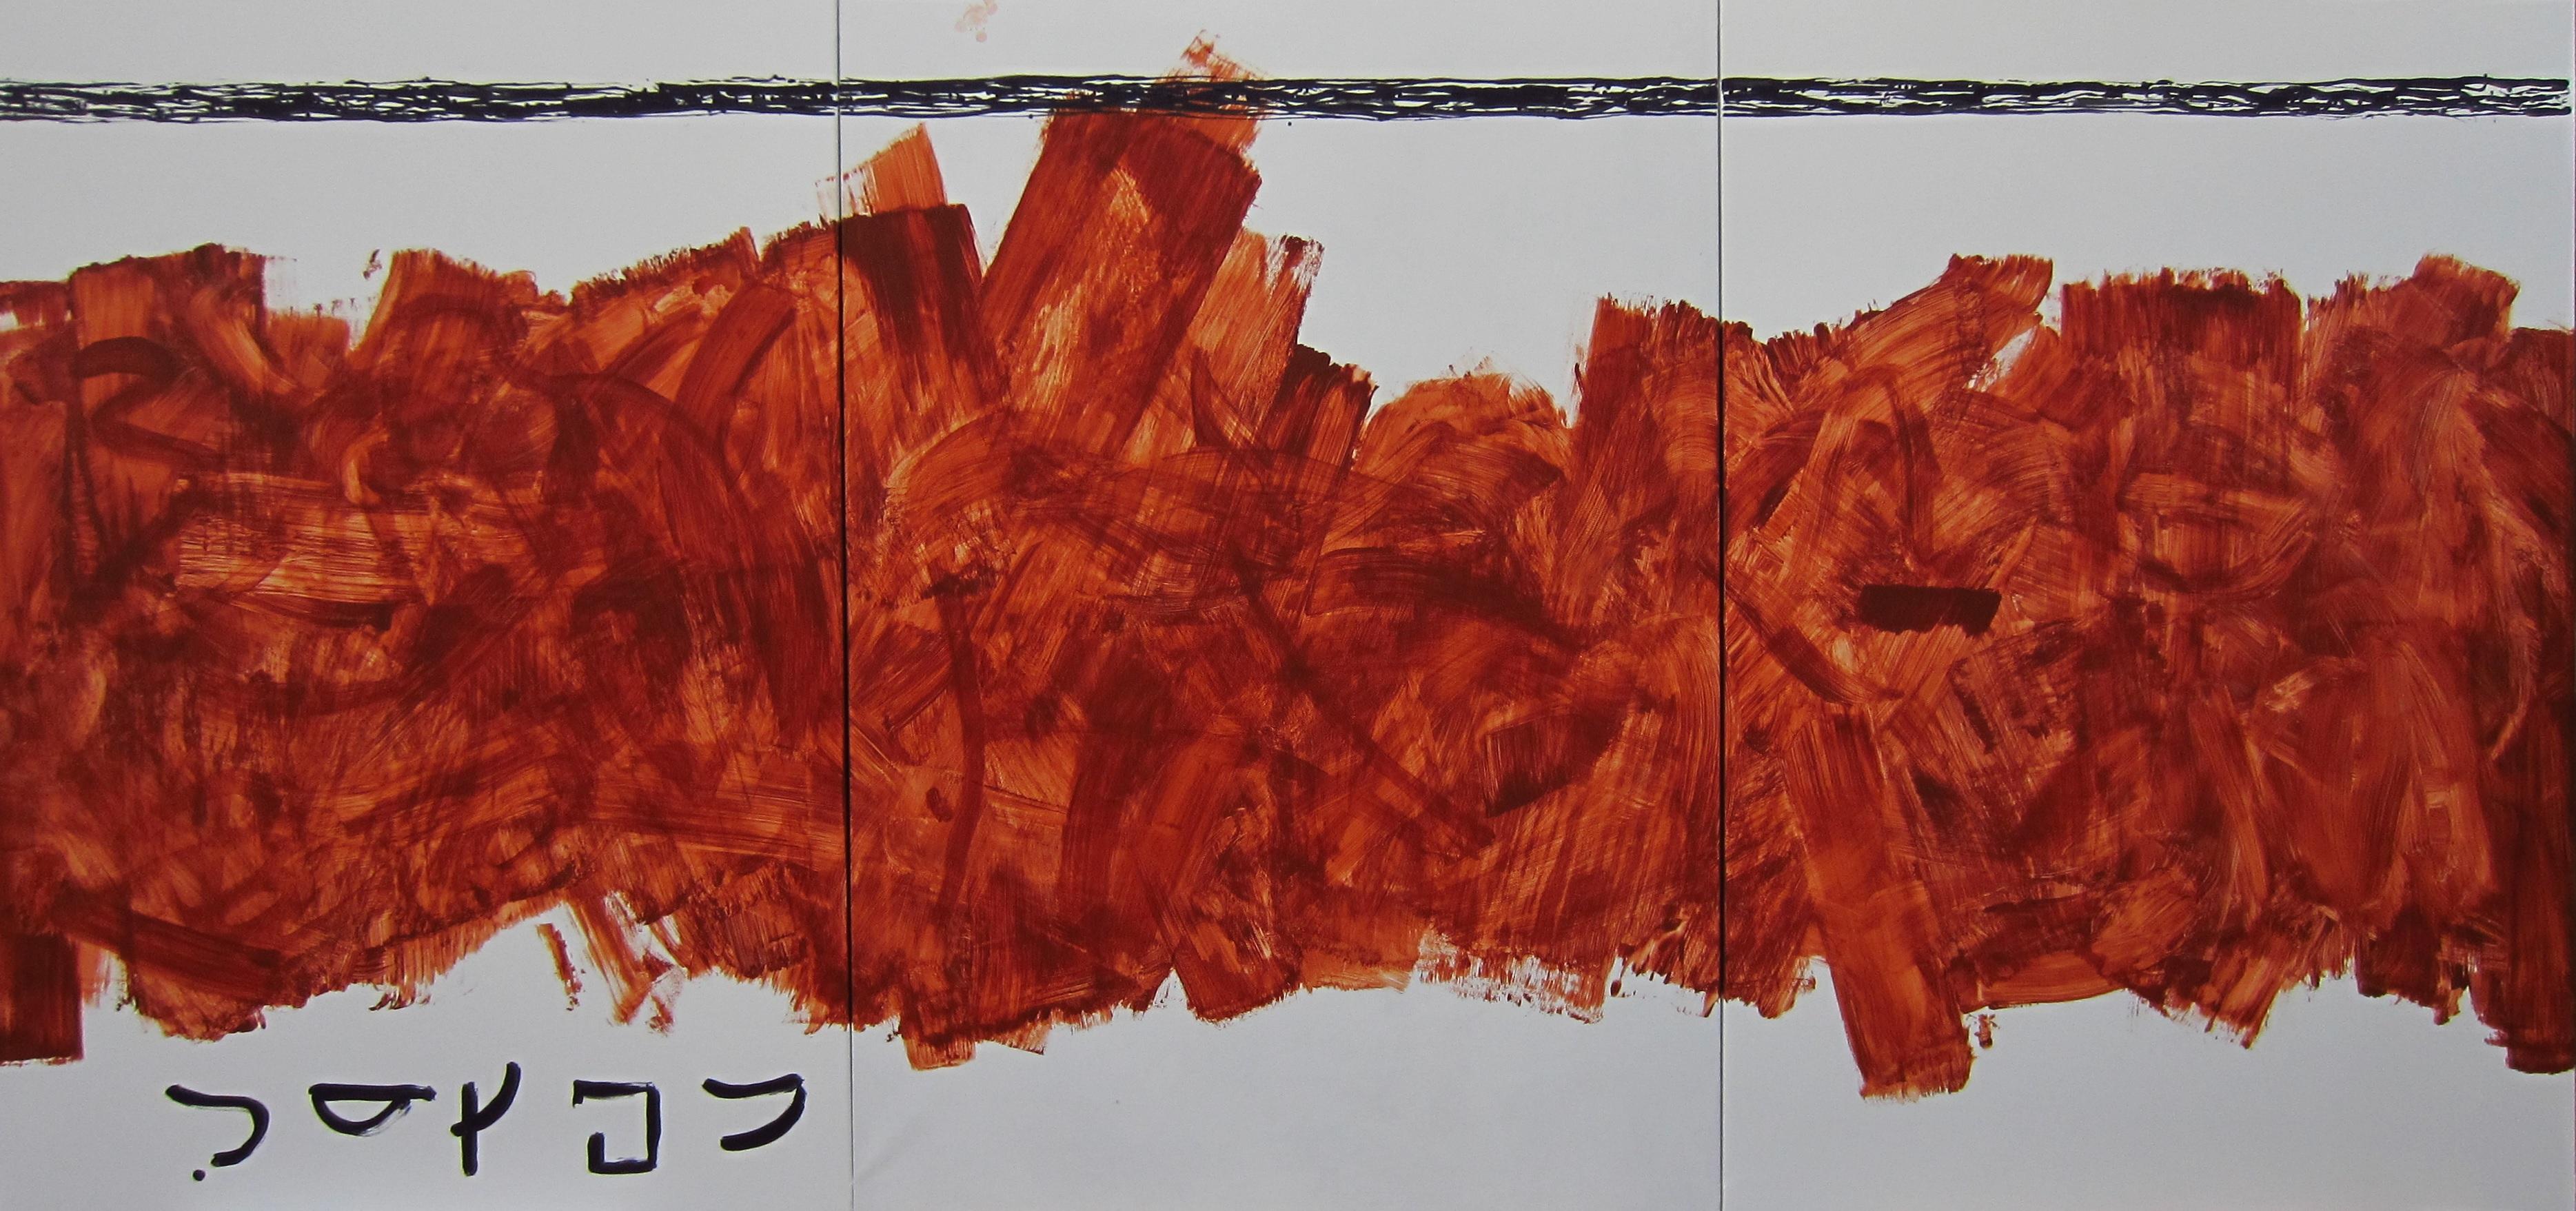 RAFAEL RUZ Abstract Painting -  Ruz 31 Red  Orange    Very Big. TRIPTYCH  original acrylic on canvas. abstract.